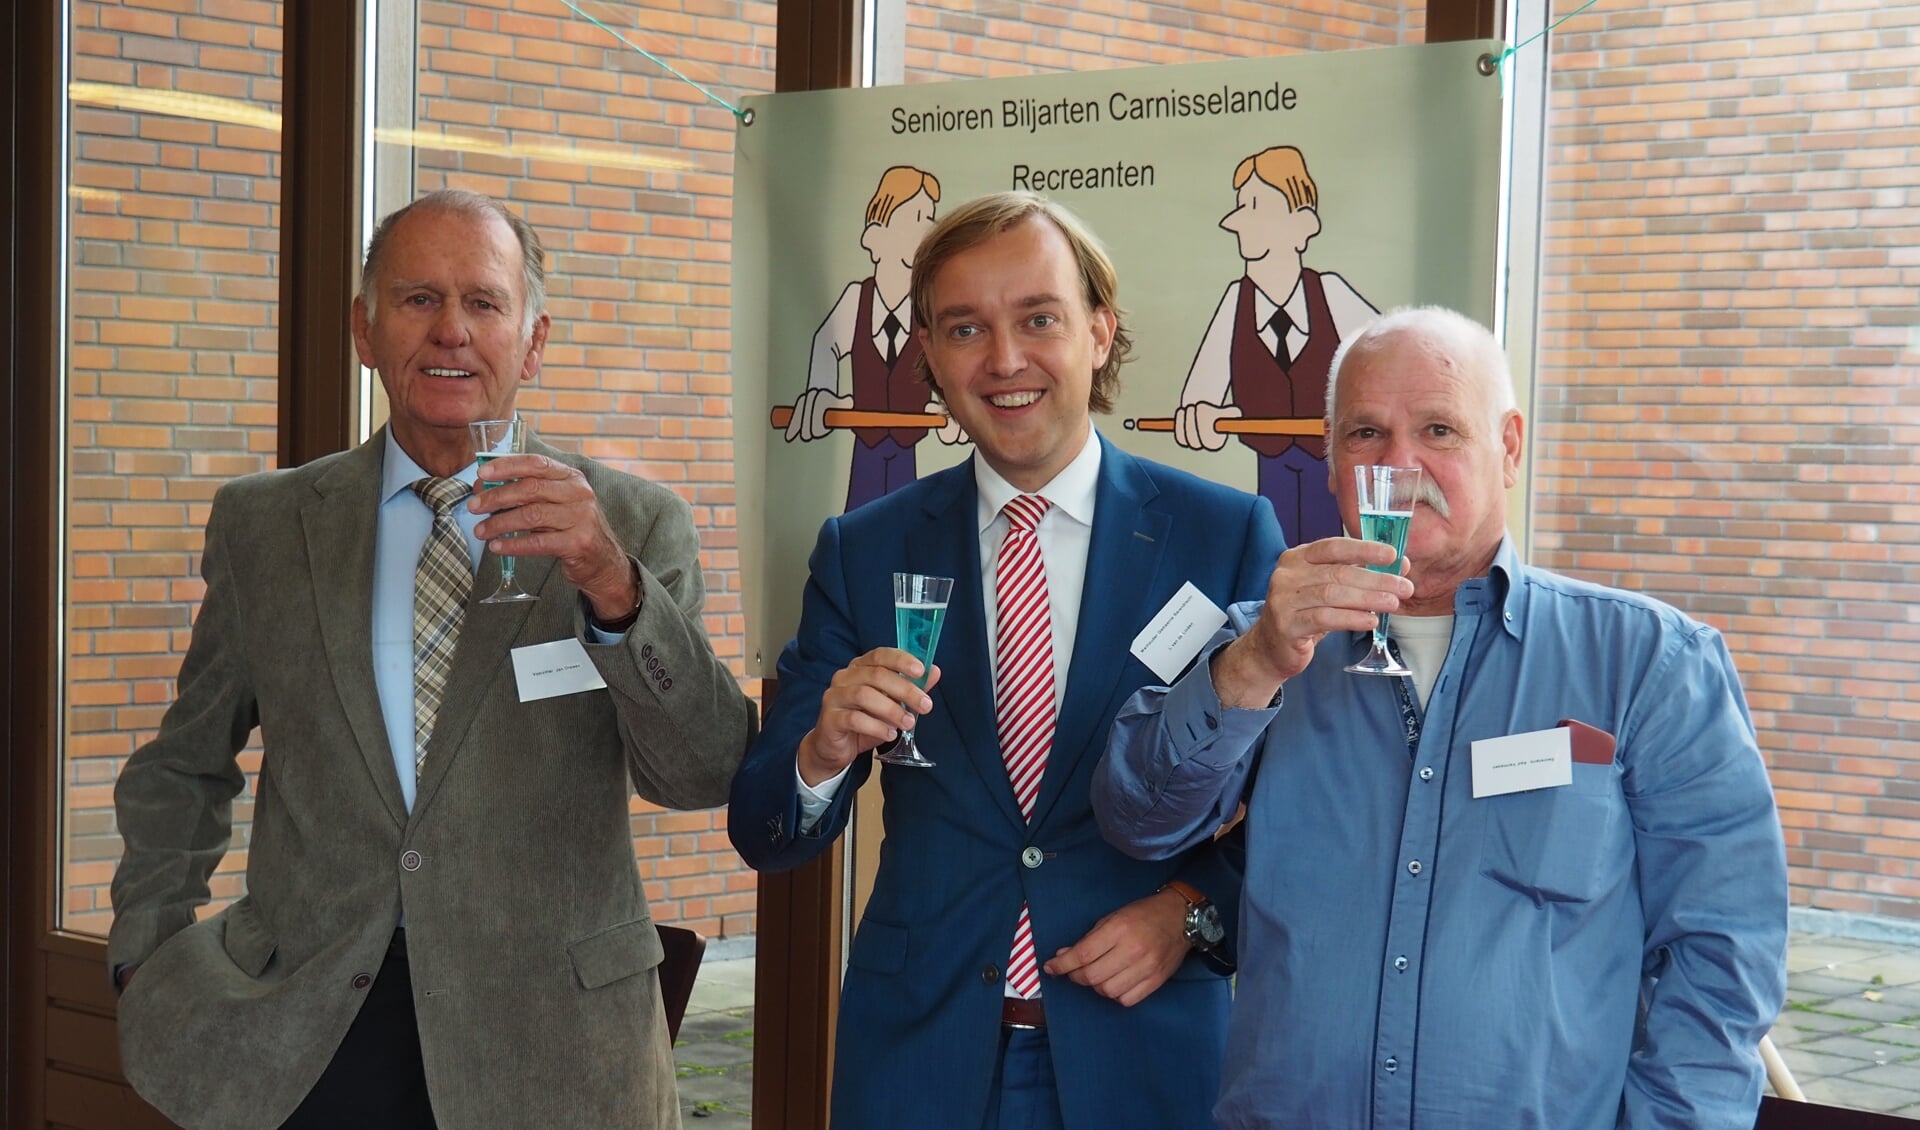 V.l.n.r. voorzitter Jan Drewes, wethouder van der Linden en Aad Vermasen.